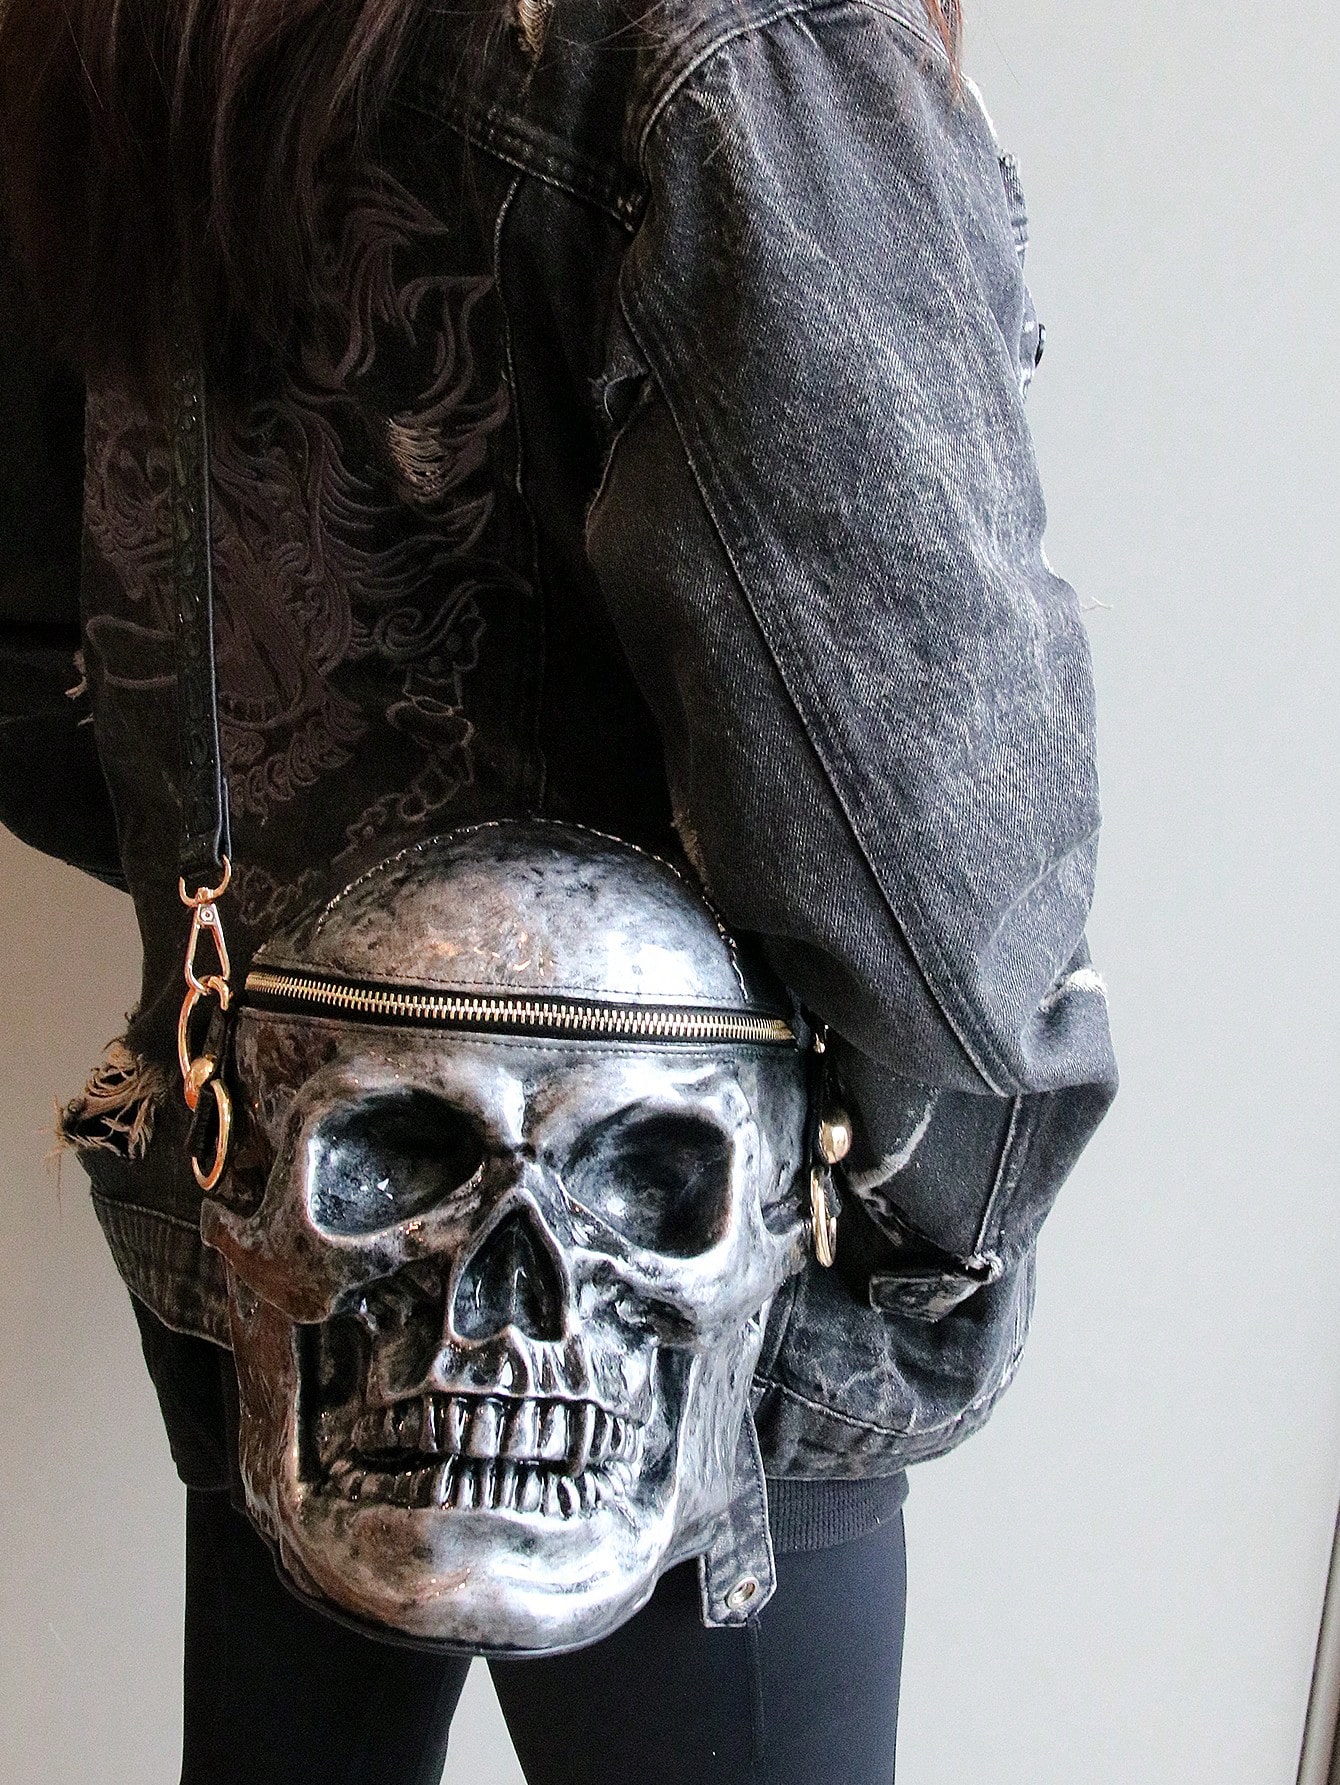 цена Сумка с 3D-дизайном черепа в стиле панк и готики, серебро